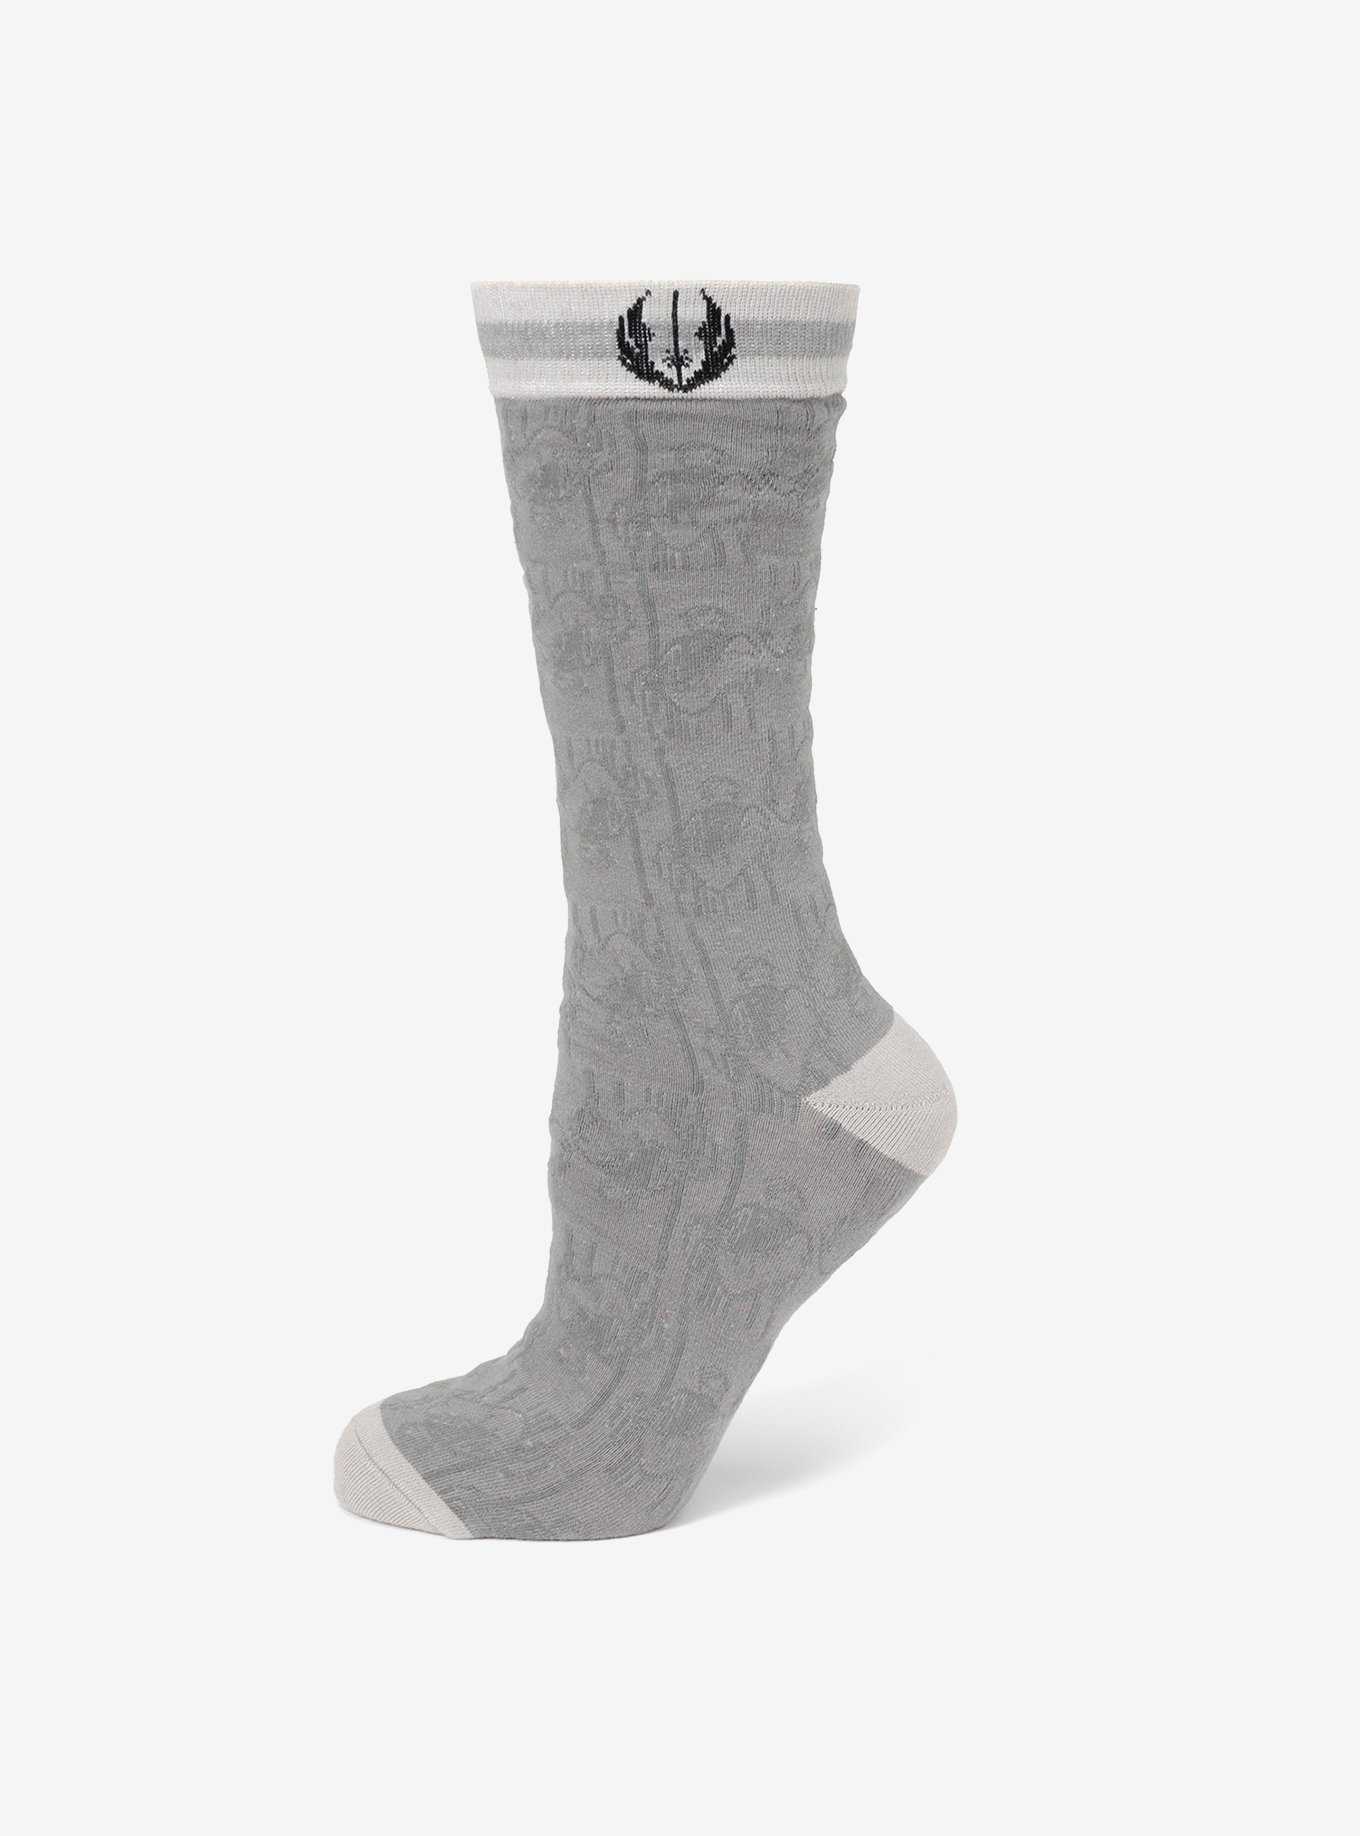 Star Wars Obi Wan Kenobi Gray Men's Socks, , hi-res